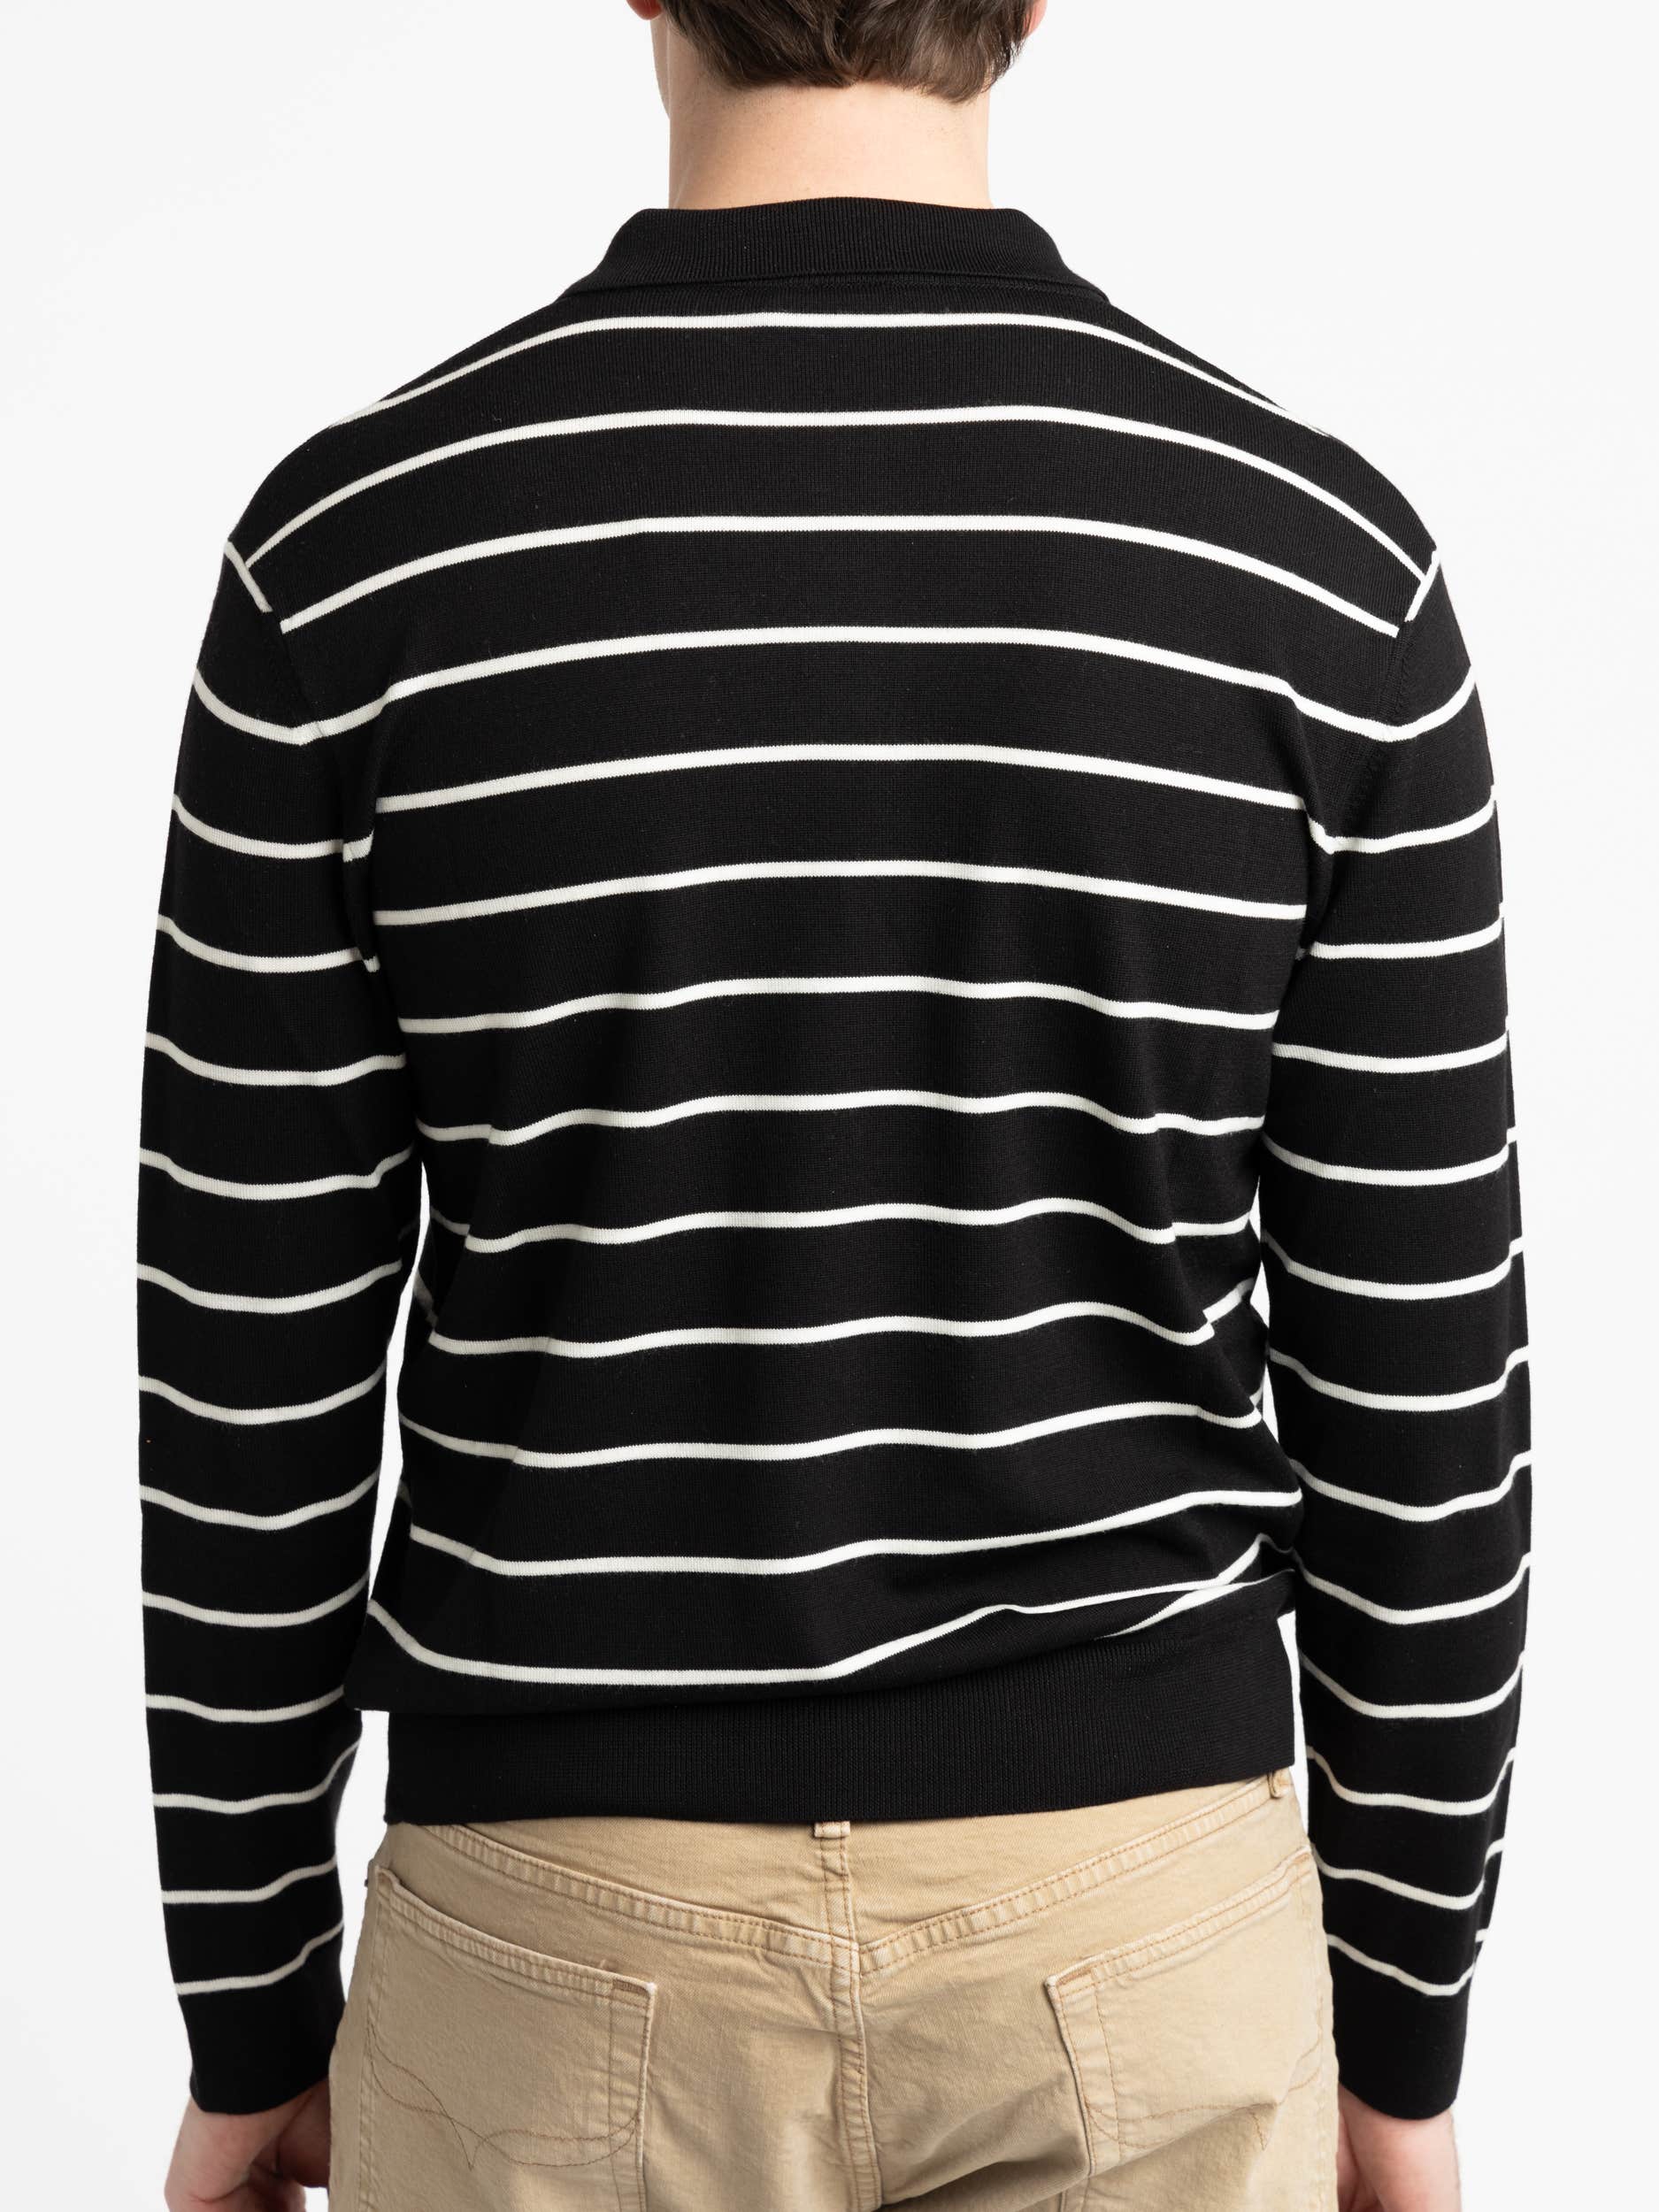 Black Striped Wool Long Sleeve Knit Polo